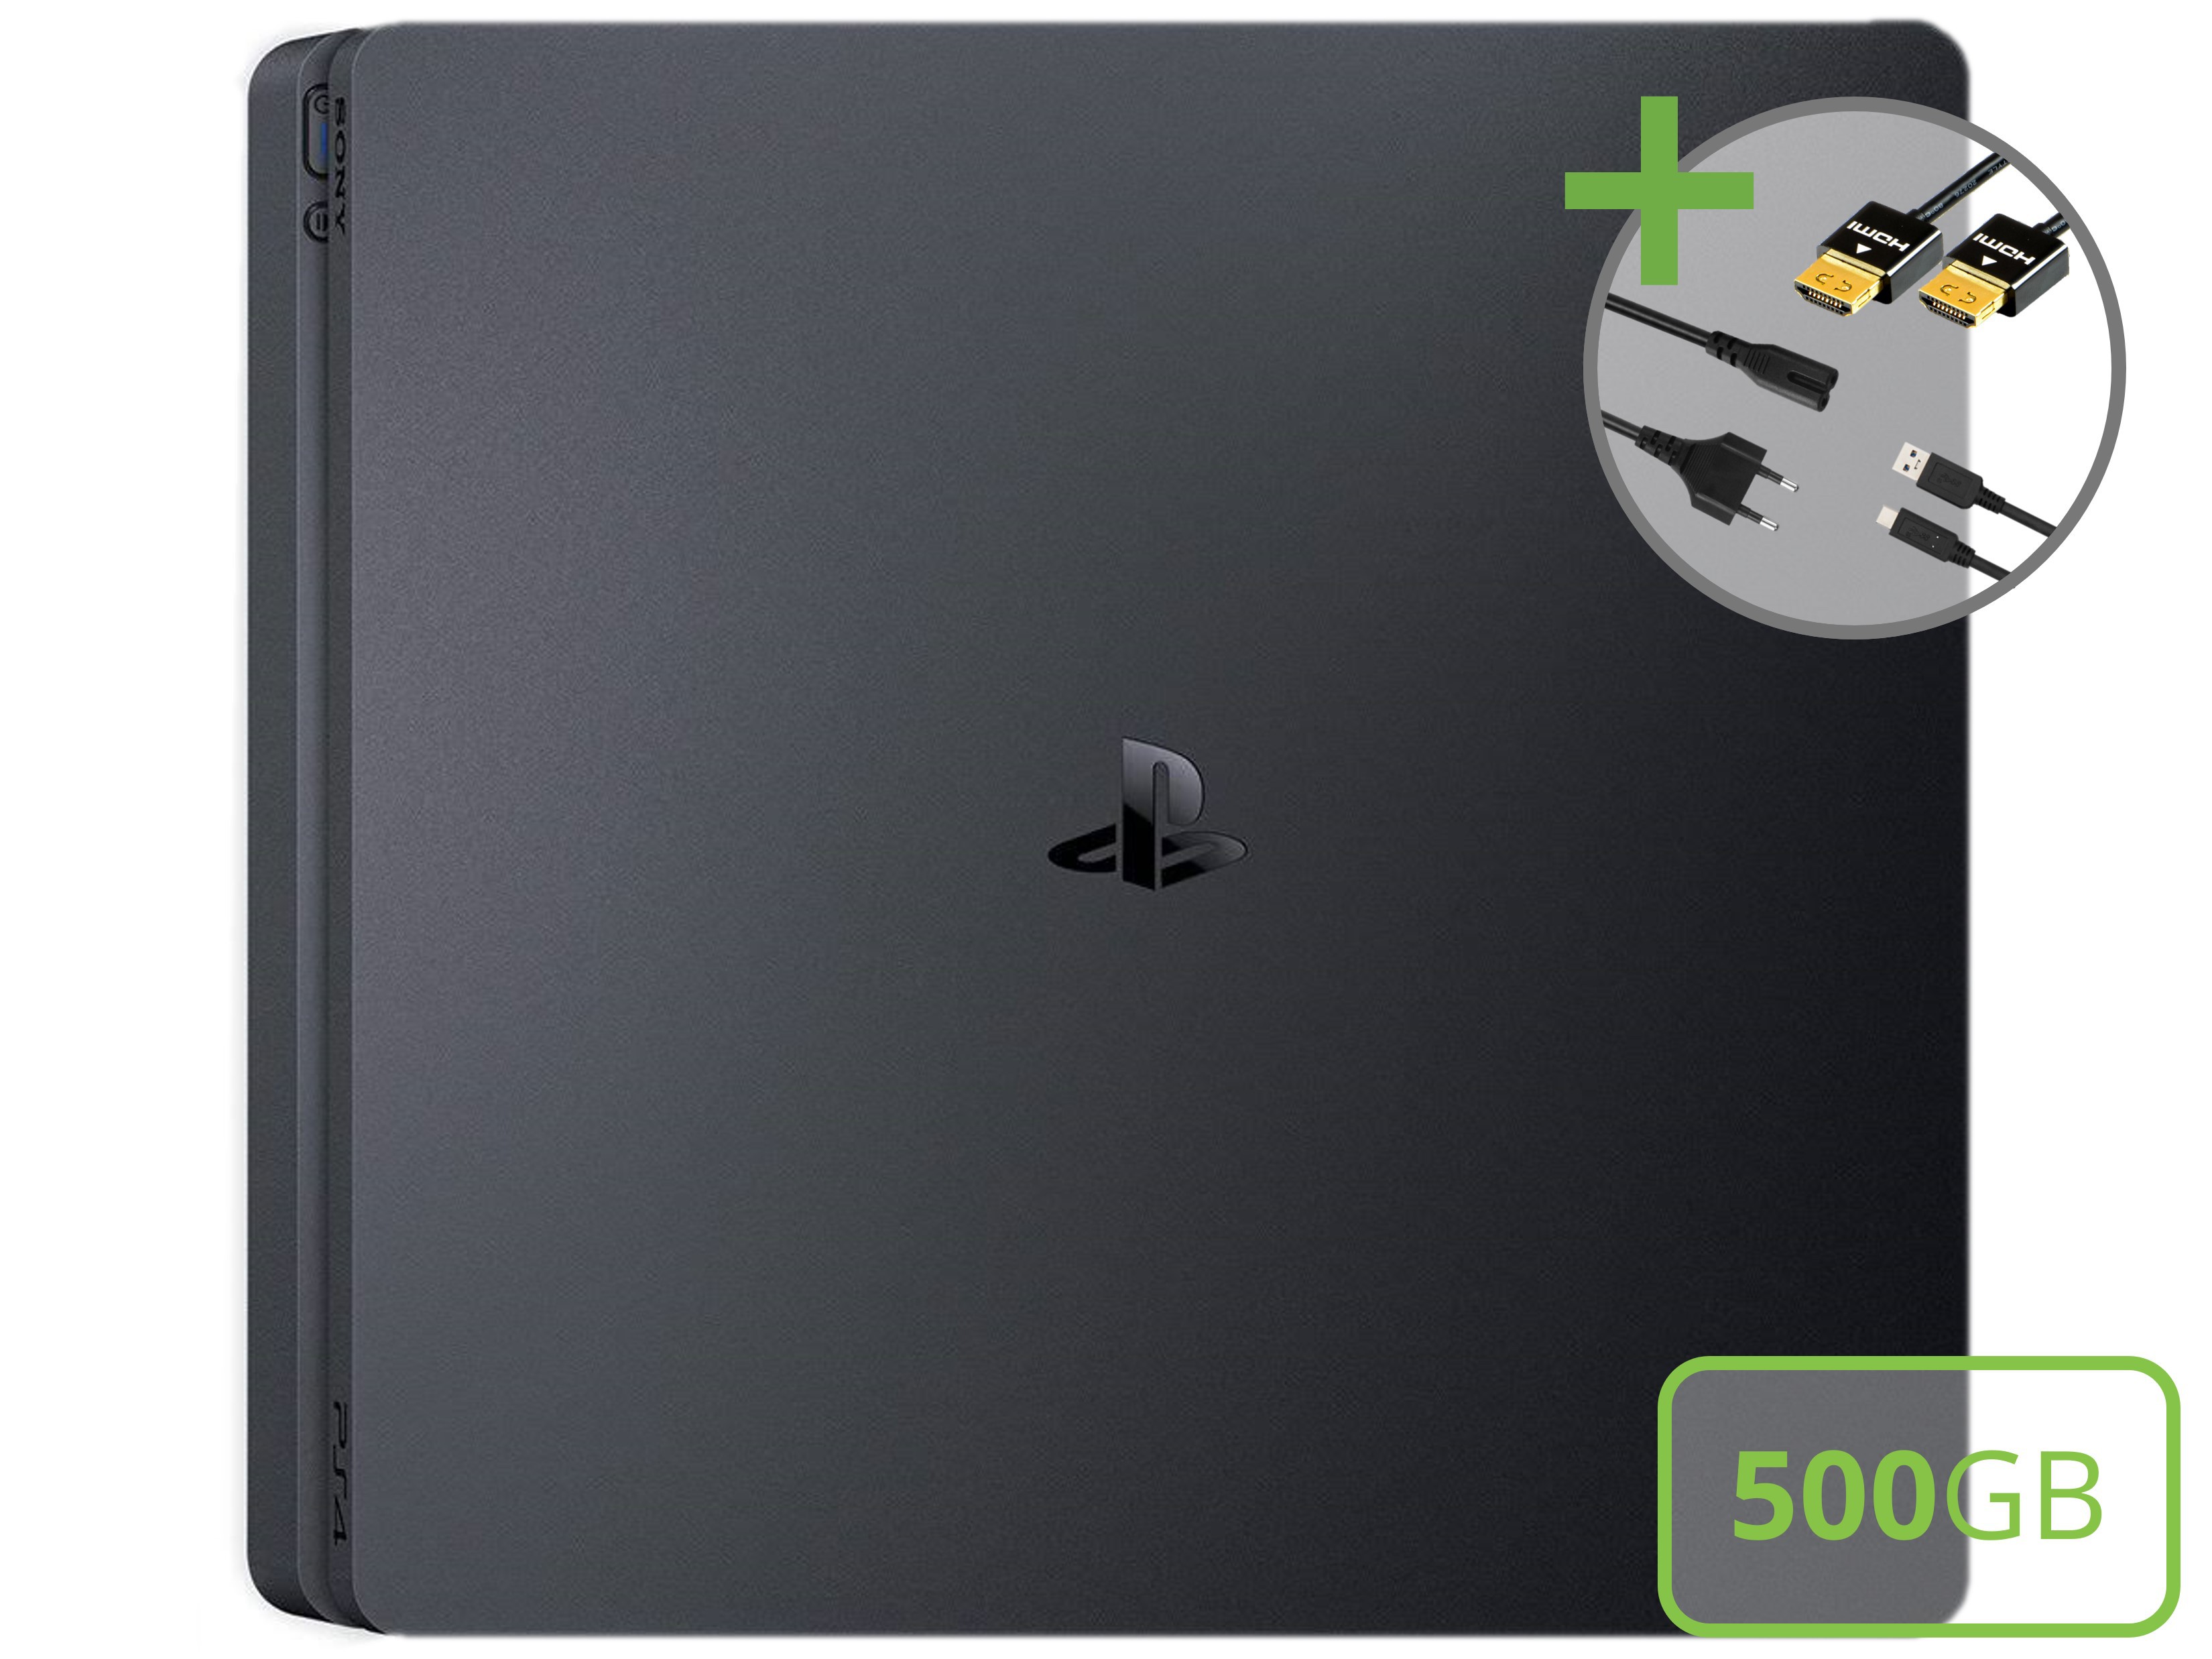 Sony PlayStation 4 Slim Starter Pack - 500GB Ratchet & Clank Edition - Playstation 4 Hardware - 3